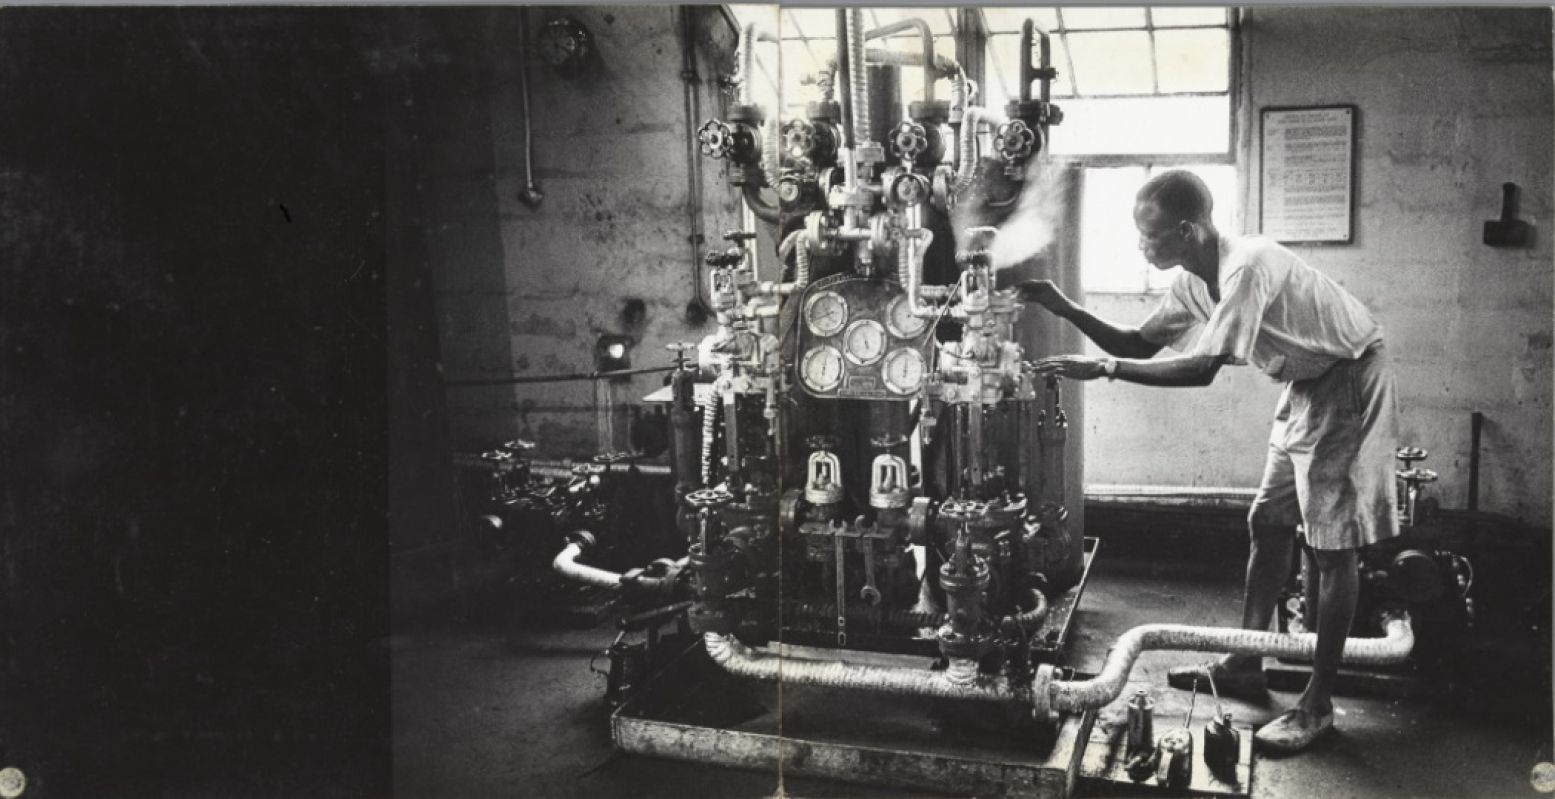 Ed van derâ€¯Elsken, 'Man en machine'. Arbeider op de werf,â€¯Burutu, Nigeria, 1959. Ontwikkelgelatinezilverdruk/ gelatinâ€¯silverâ€¯print. Spread uit de dummy van het fotoboekâ€¯Sweetâ€¯Life, vââr 1966. Foto: Rijksmuseum © Ed van der Elsken